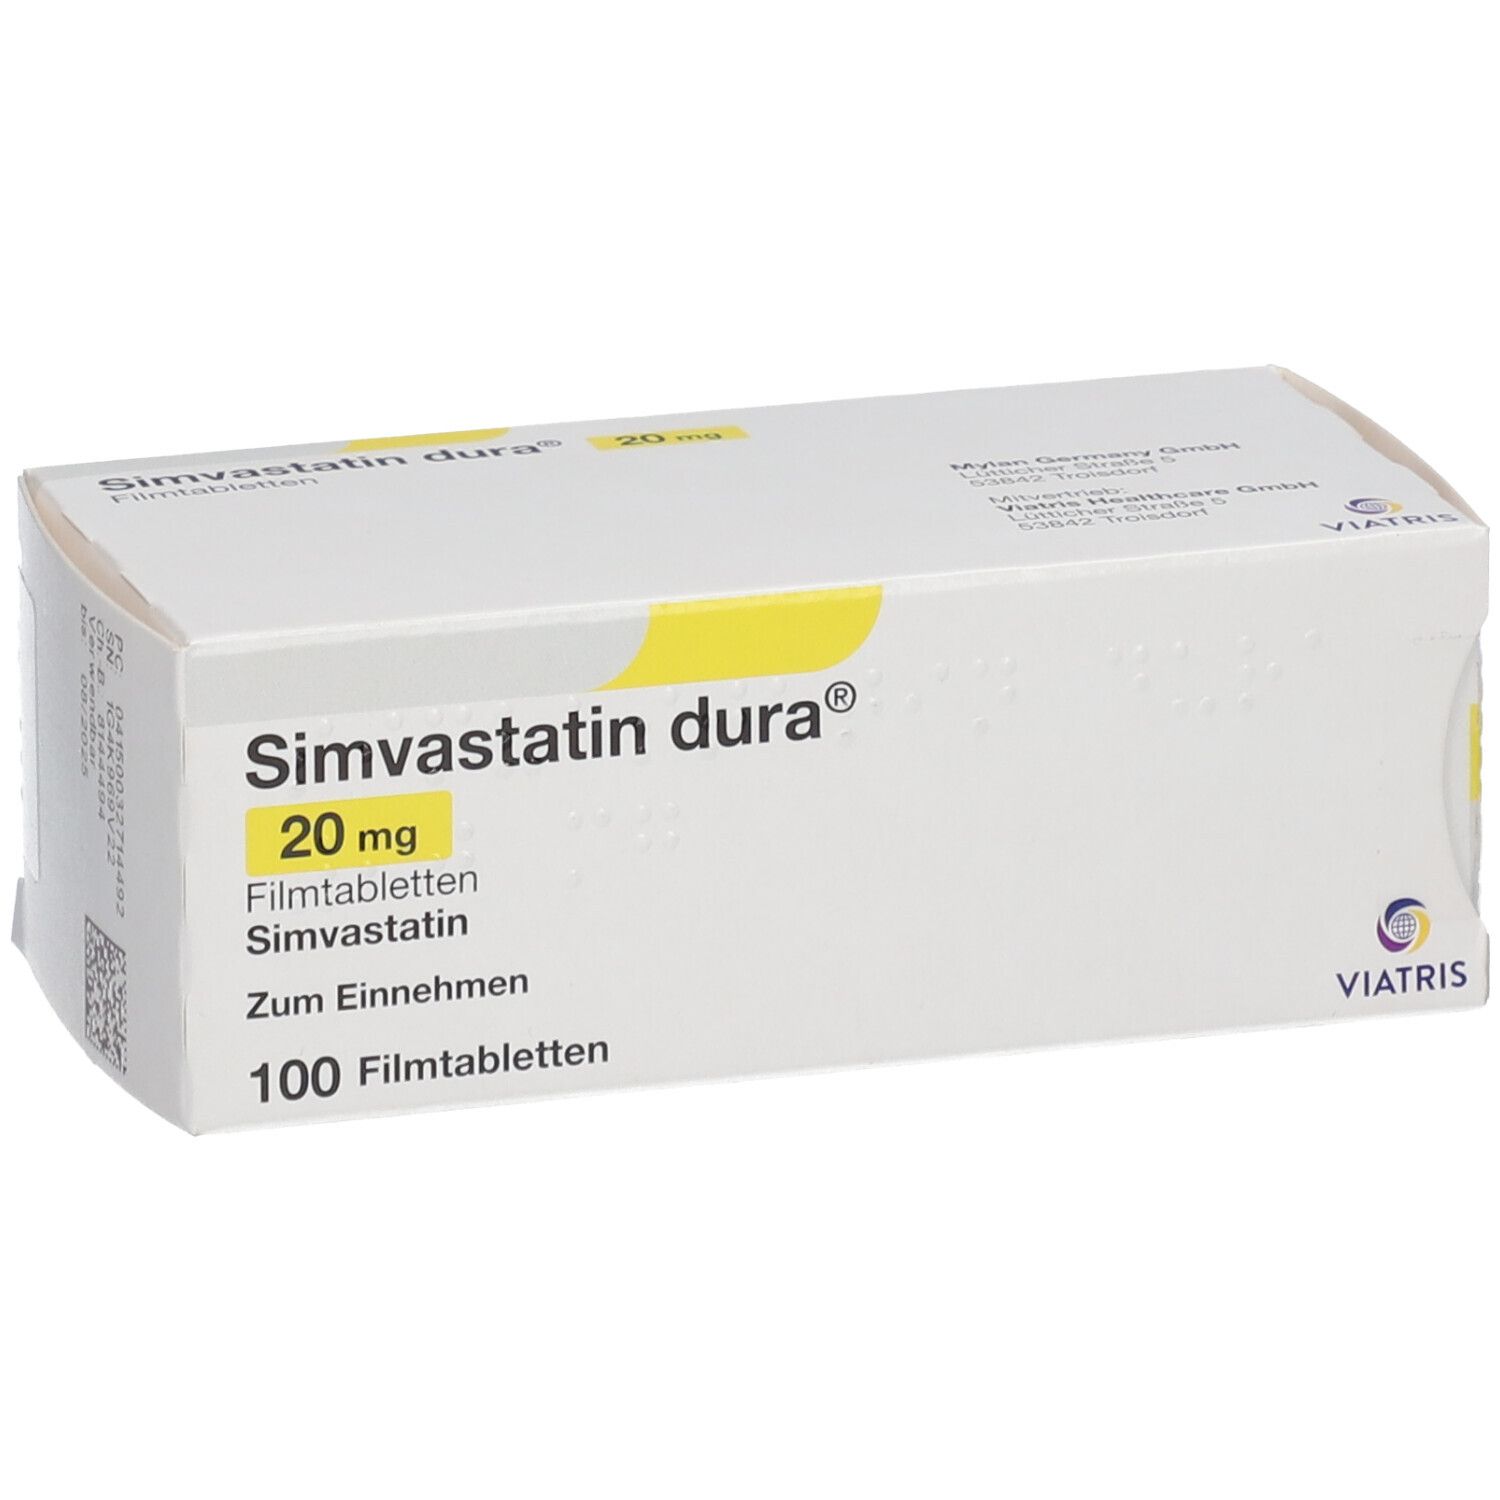 Simvastatin dura® 20 mg